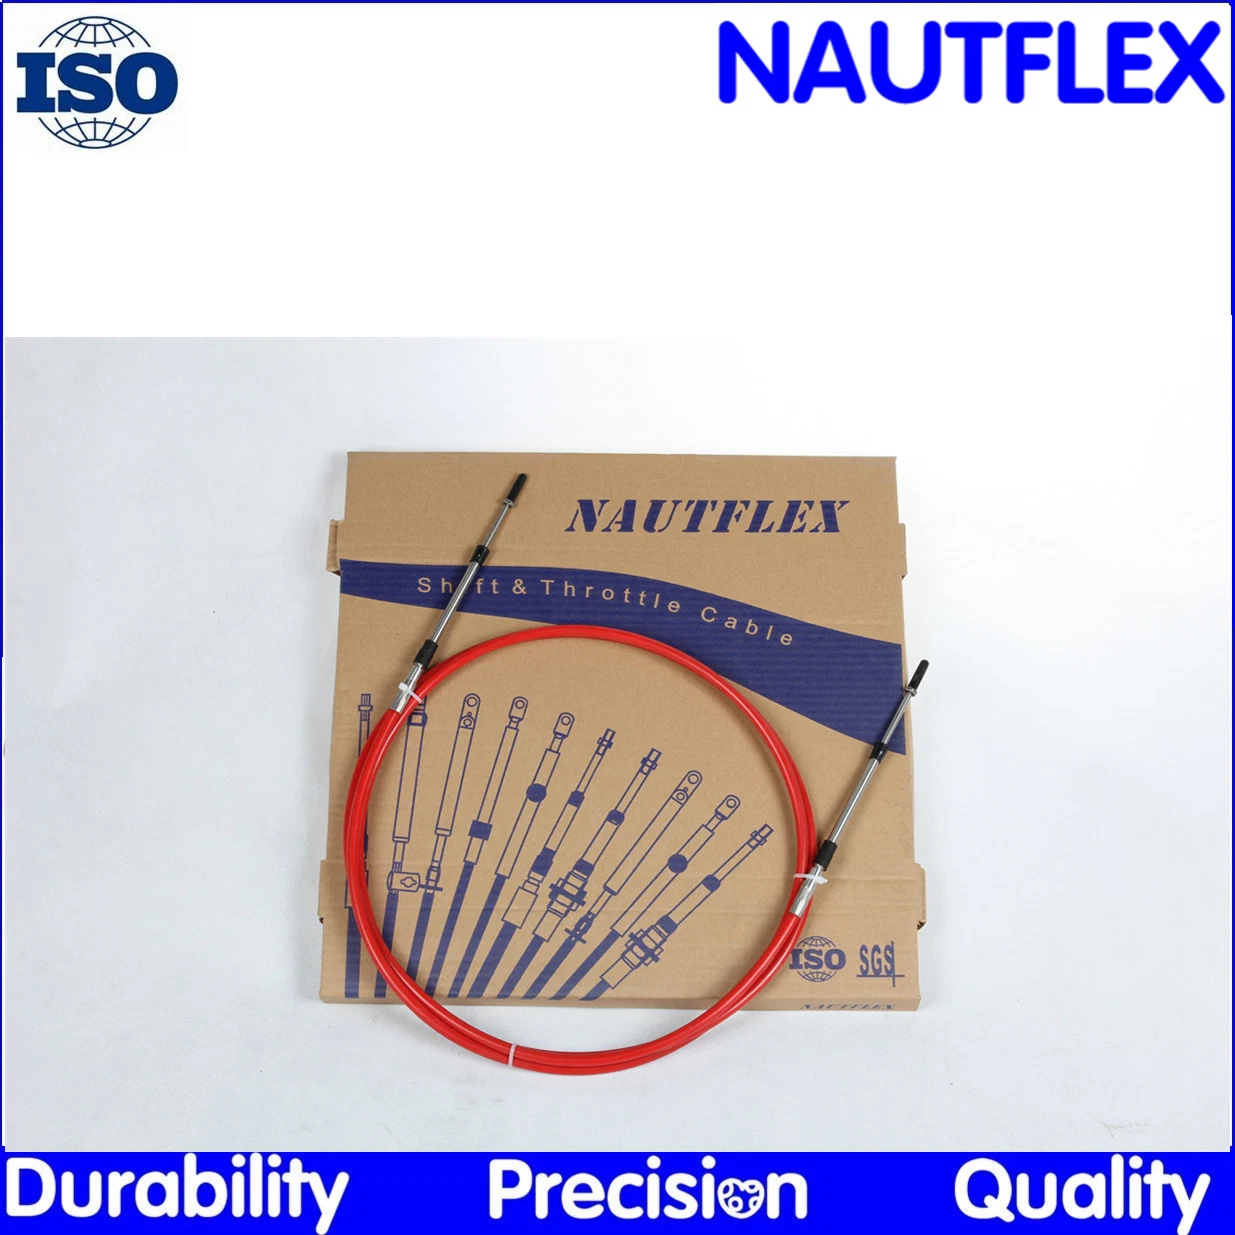 Nautflex Engine Control Cable 33c, 10-32 Threaded